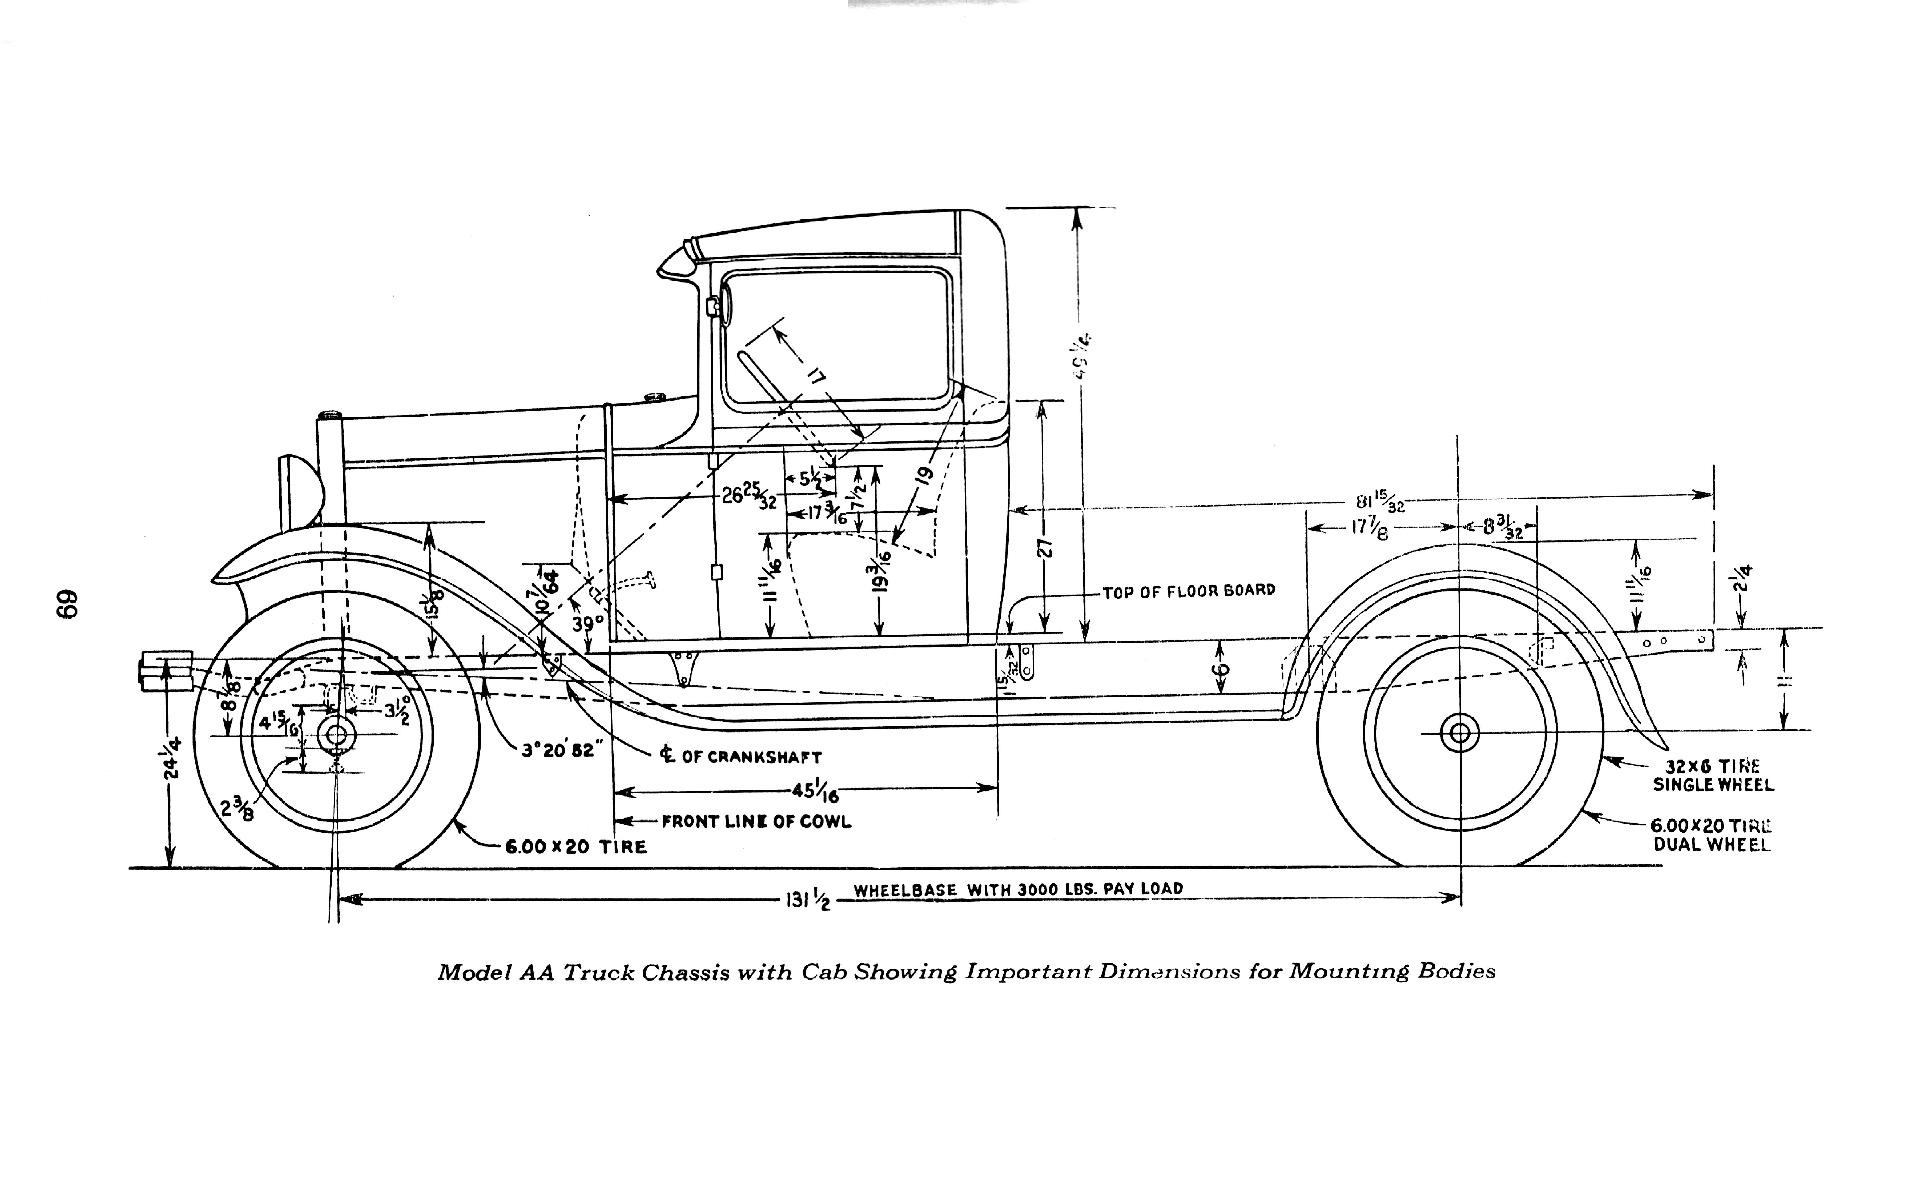 Measurements of ford models #1